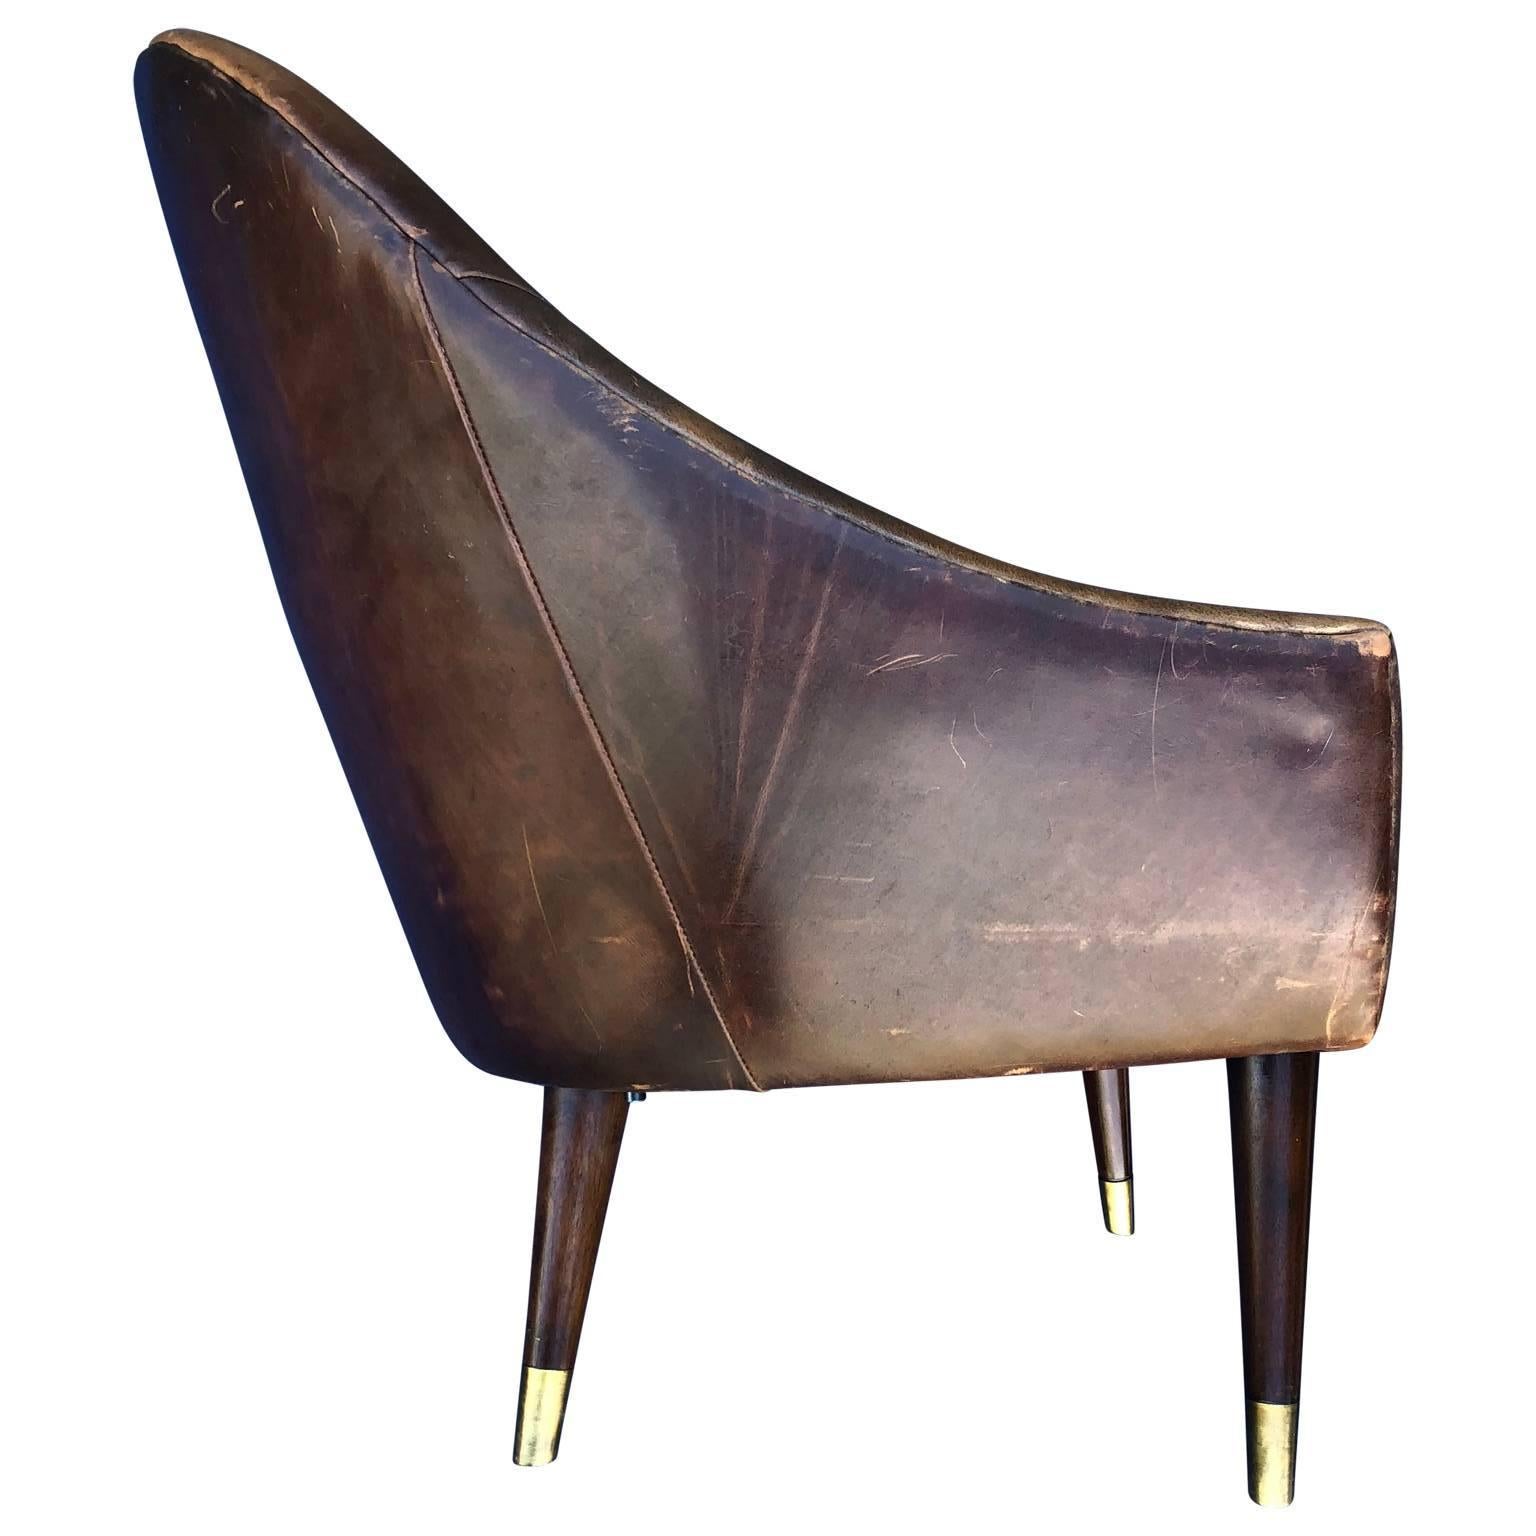 Vintage American High Back Leather Club Chair (amerikanisch)